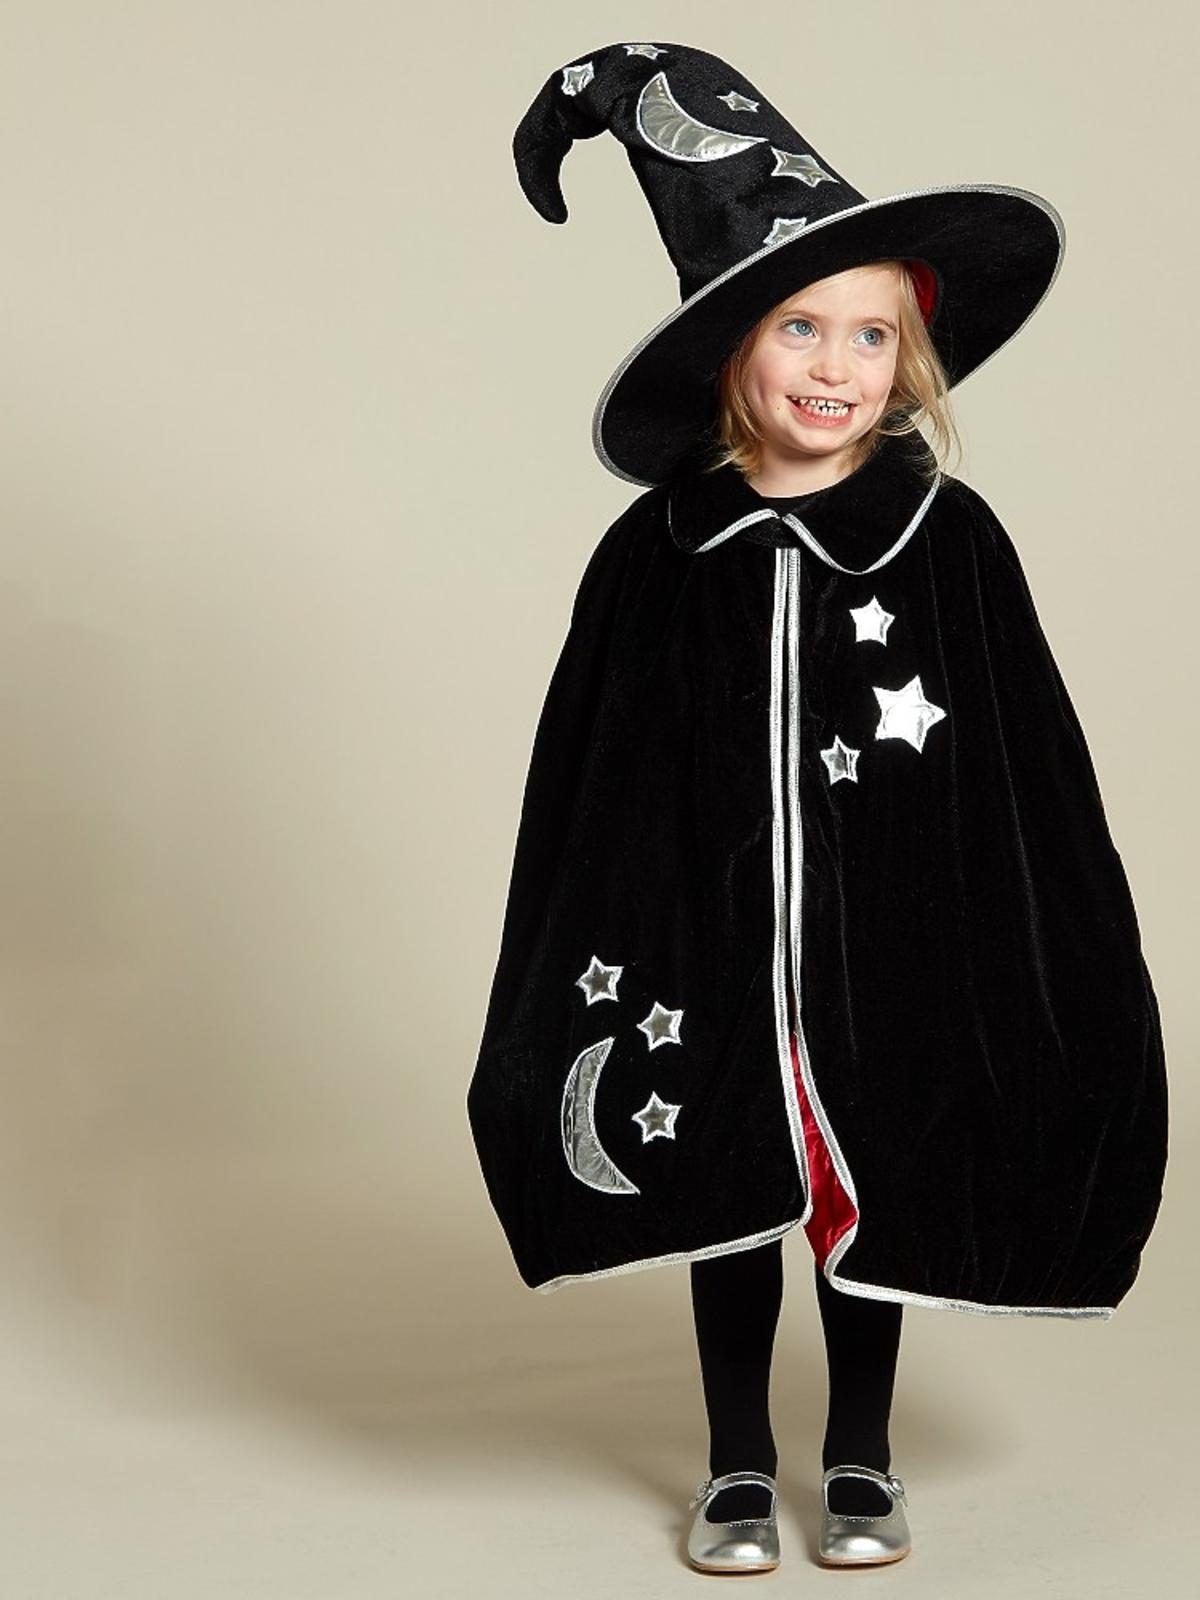 souza-wizard-or-witch-dressing-up-costume-children-salon-com_46-25-euro.jpg